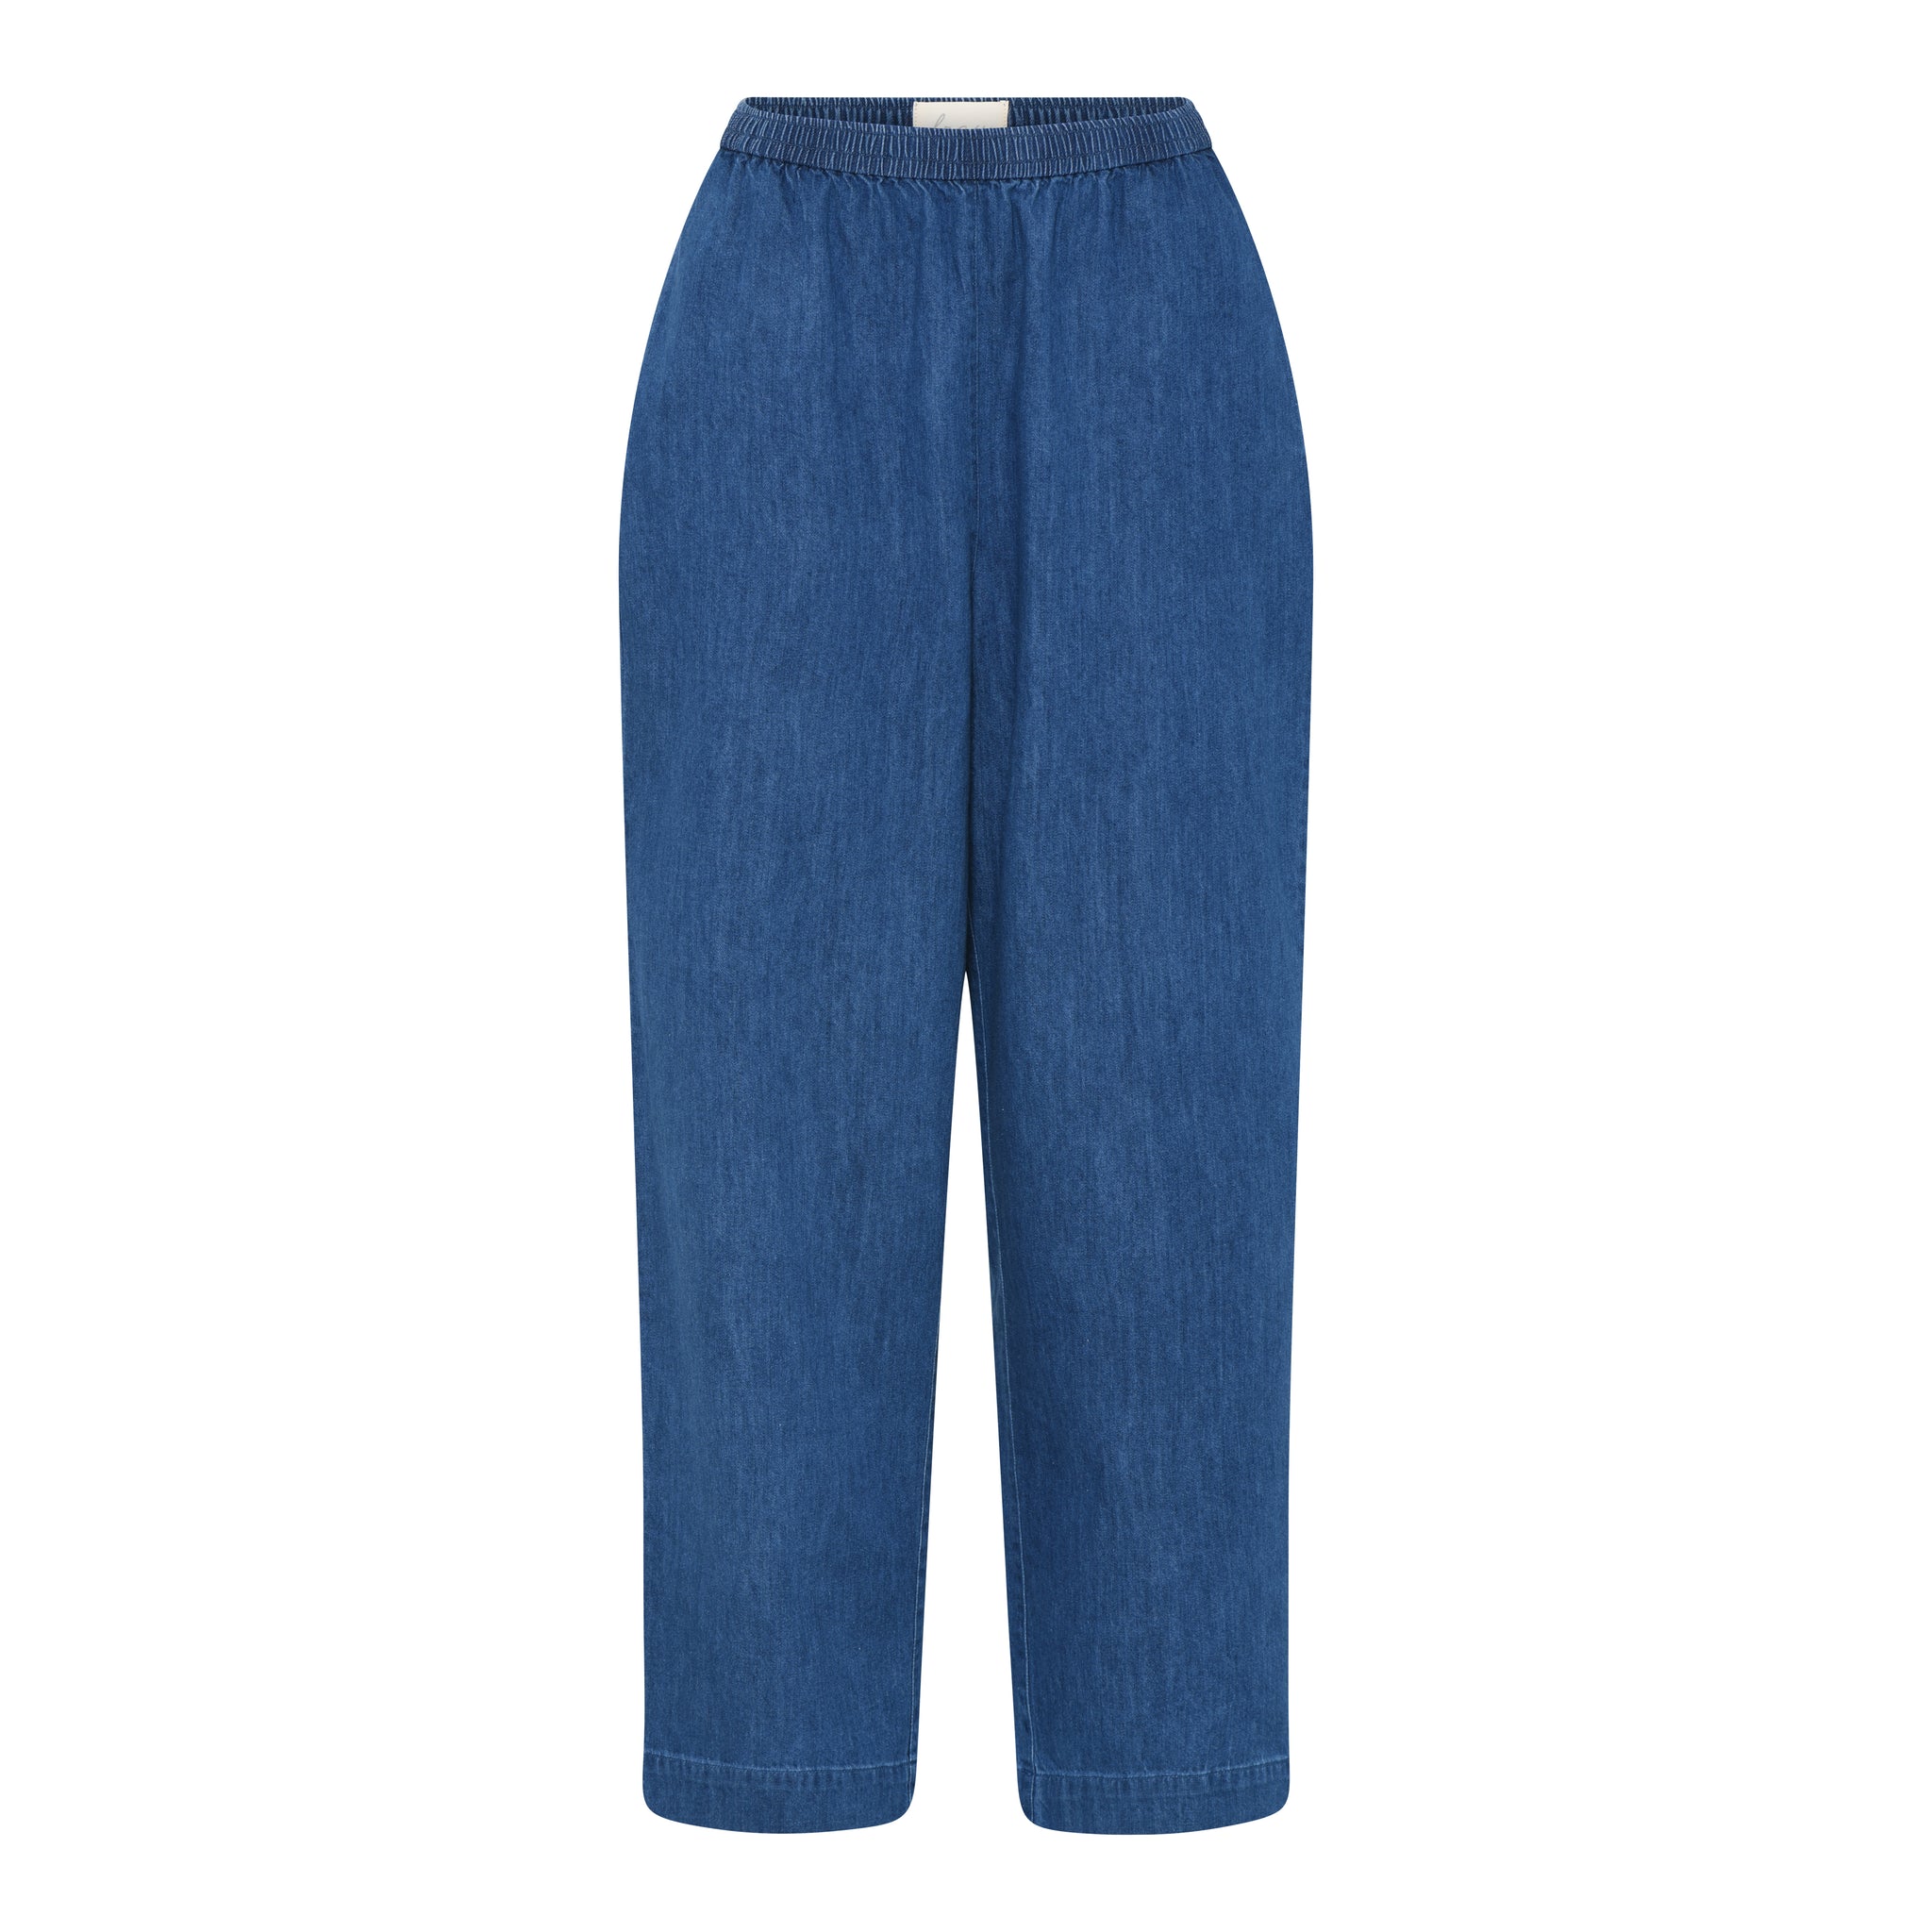 Melbourne ankel bukser - Clear Blue Denim - FRAU